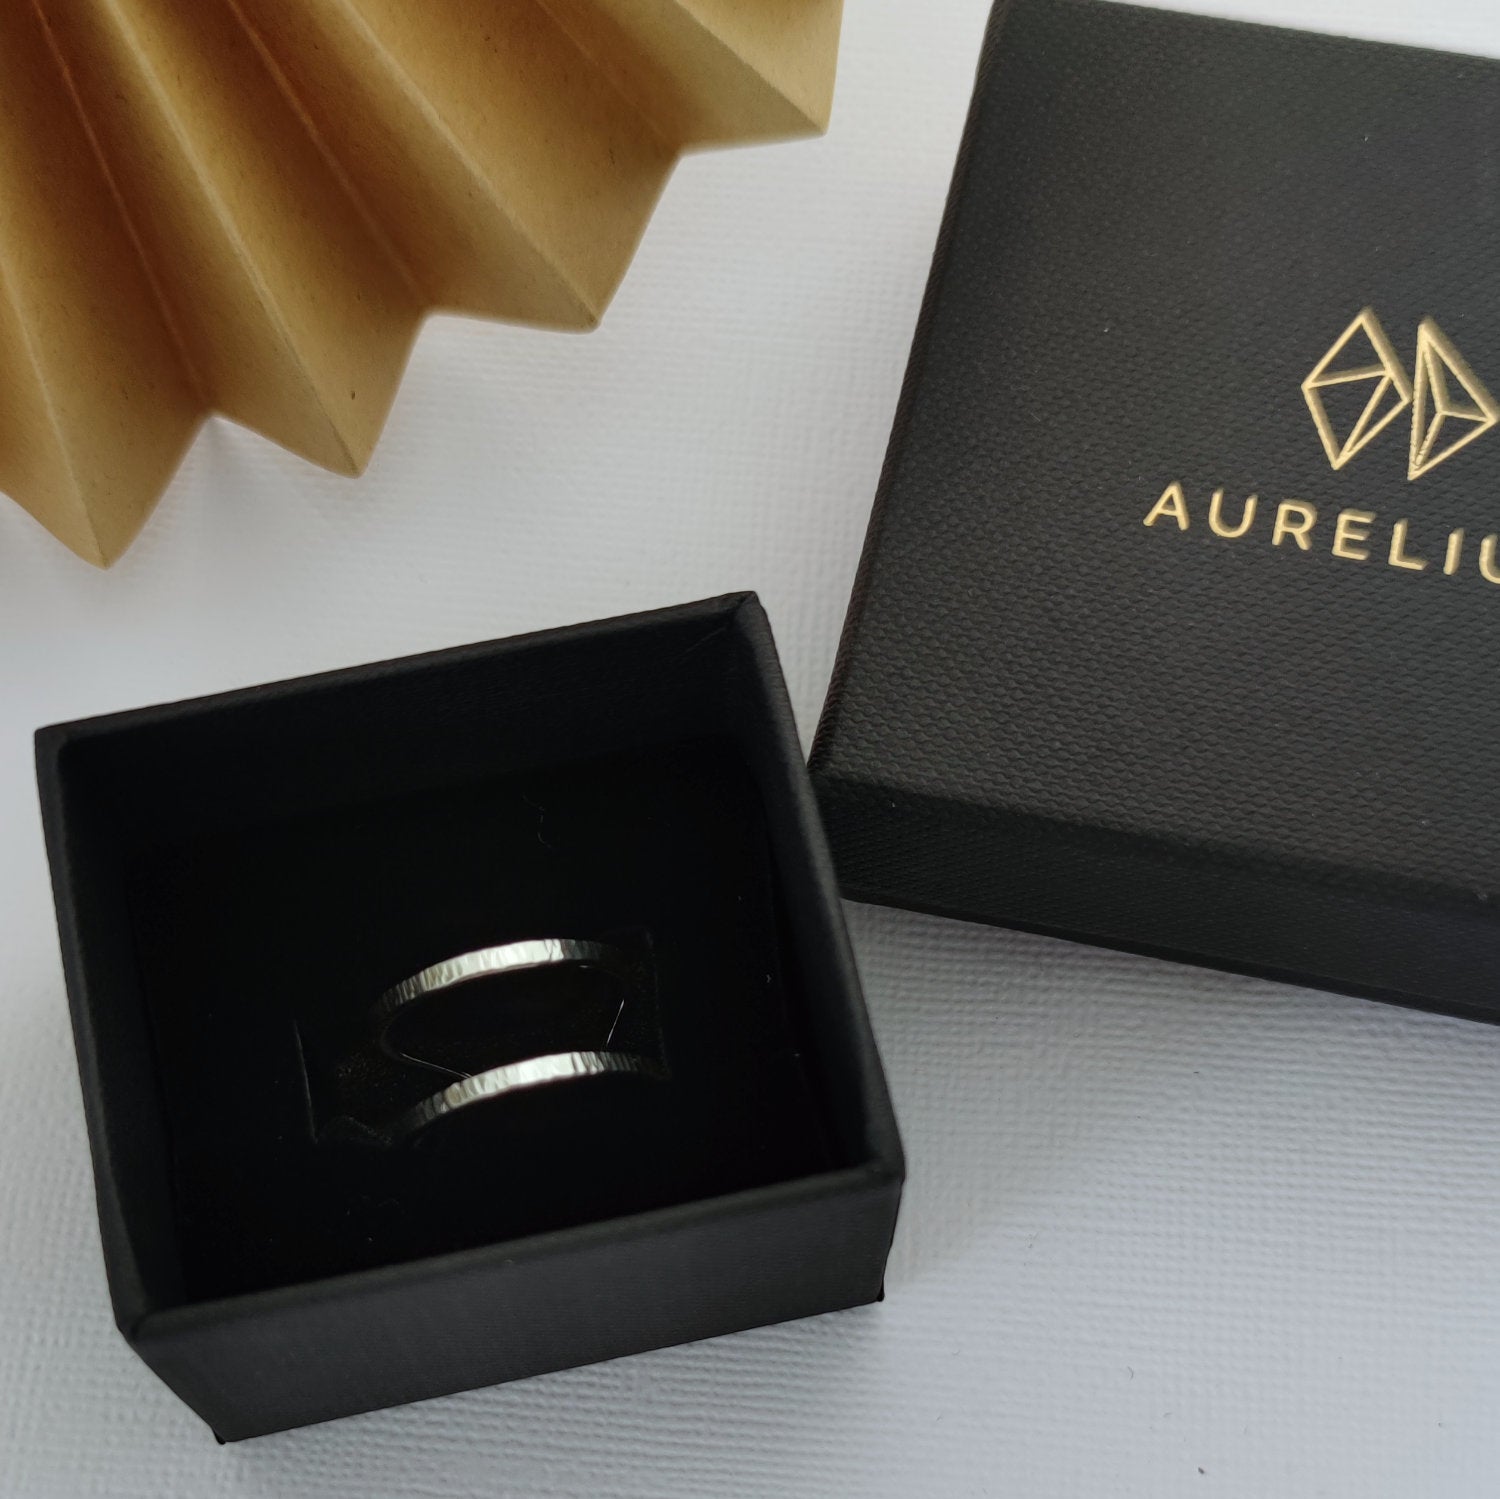 sterling silver wrap ring in aurelium black gift box